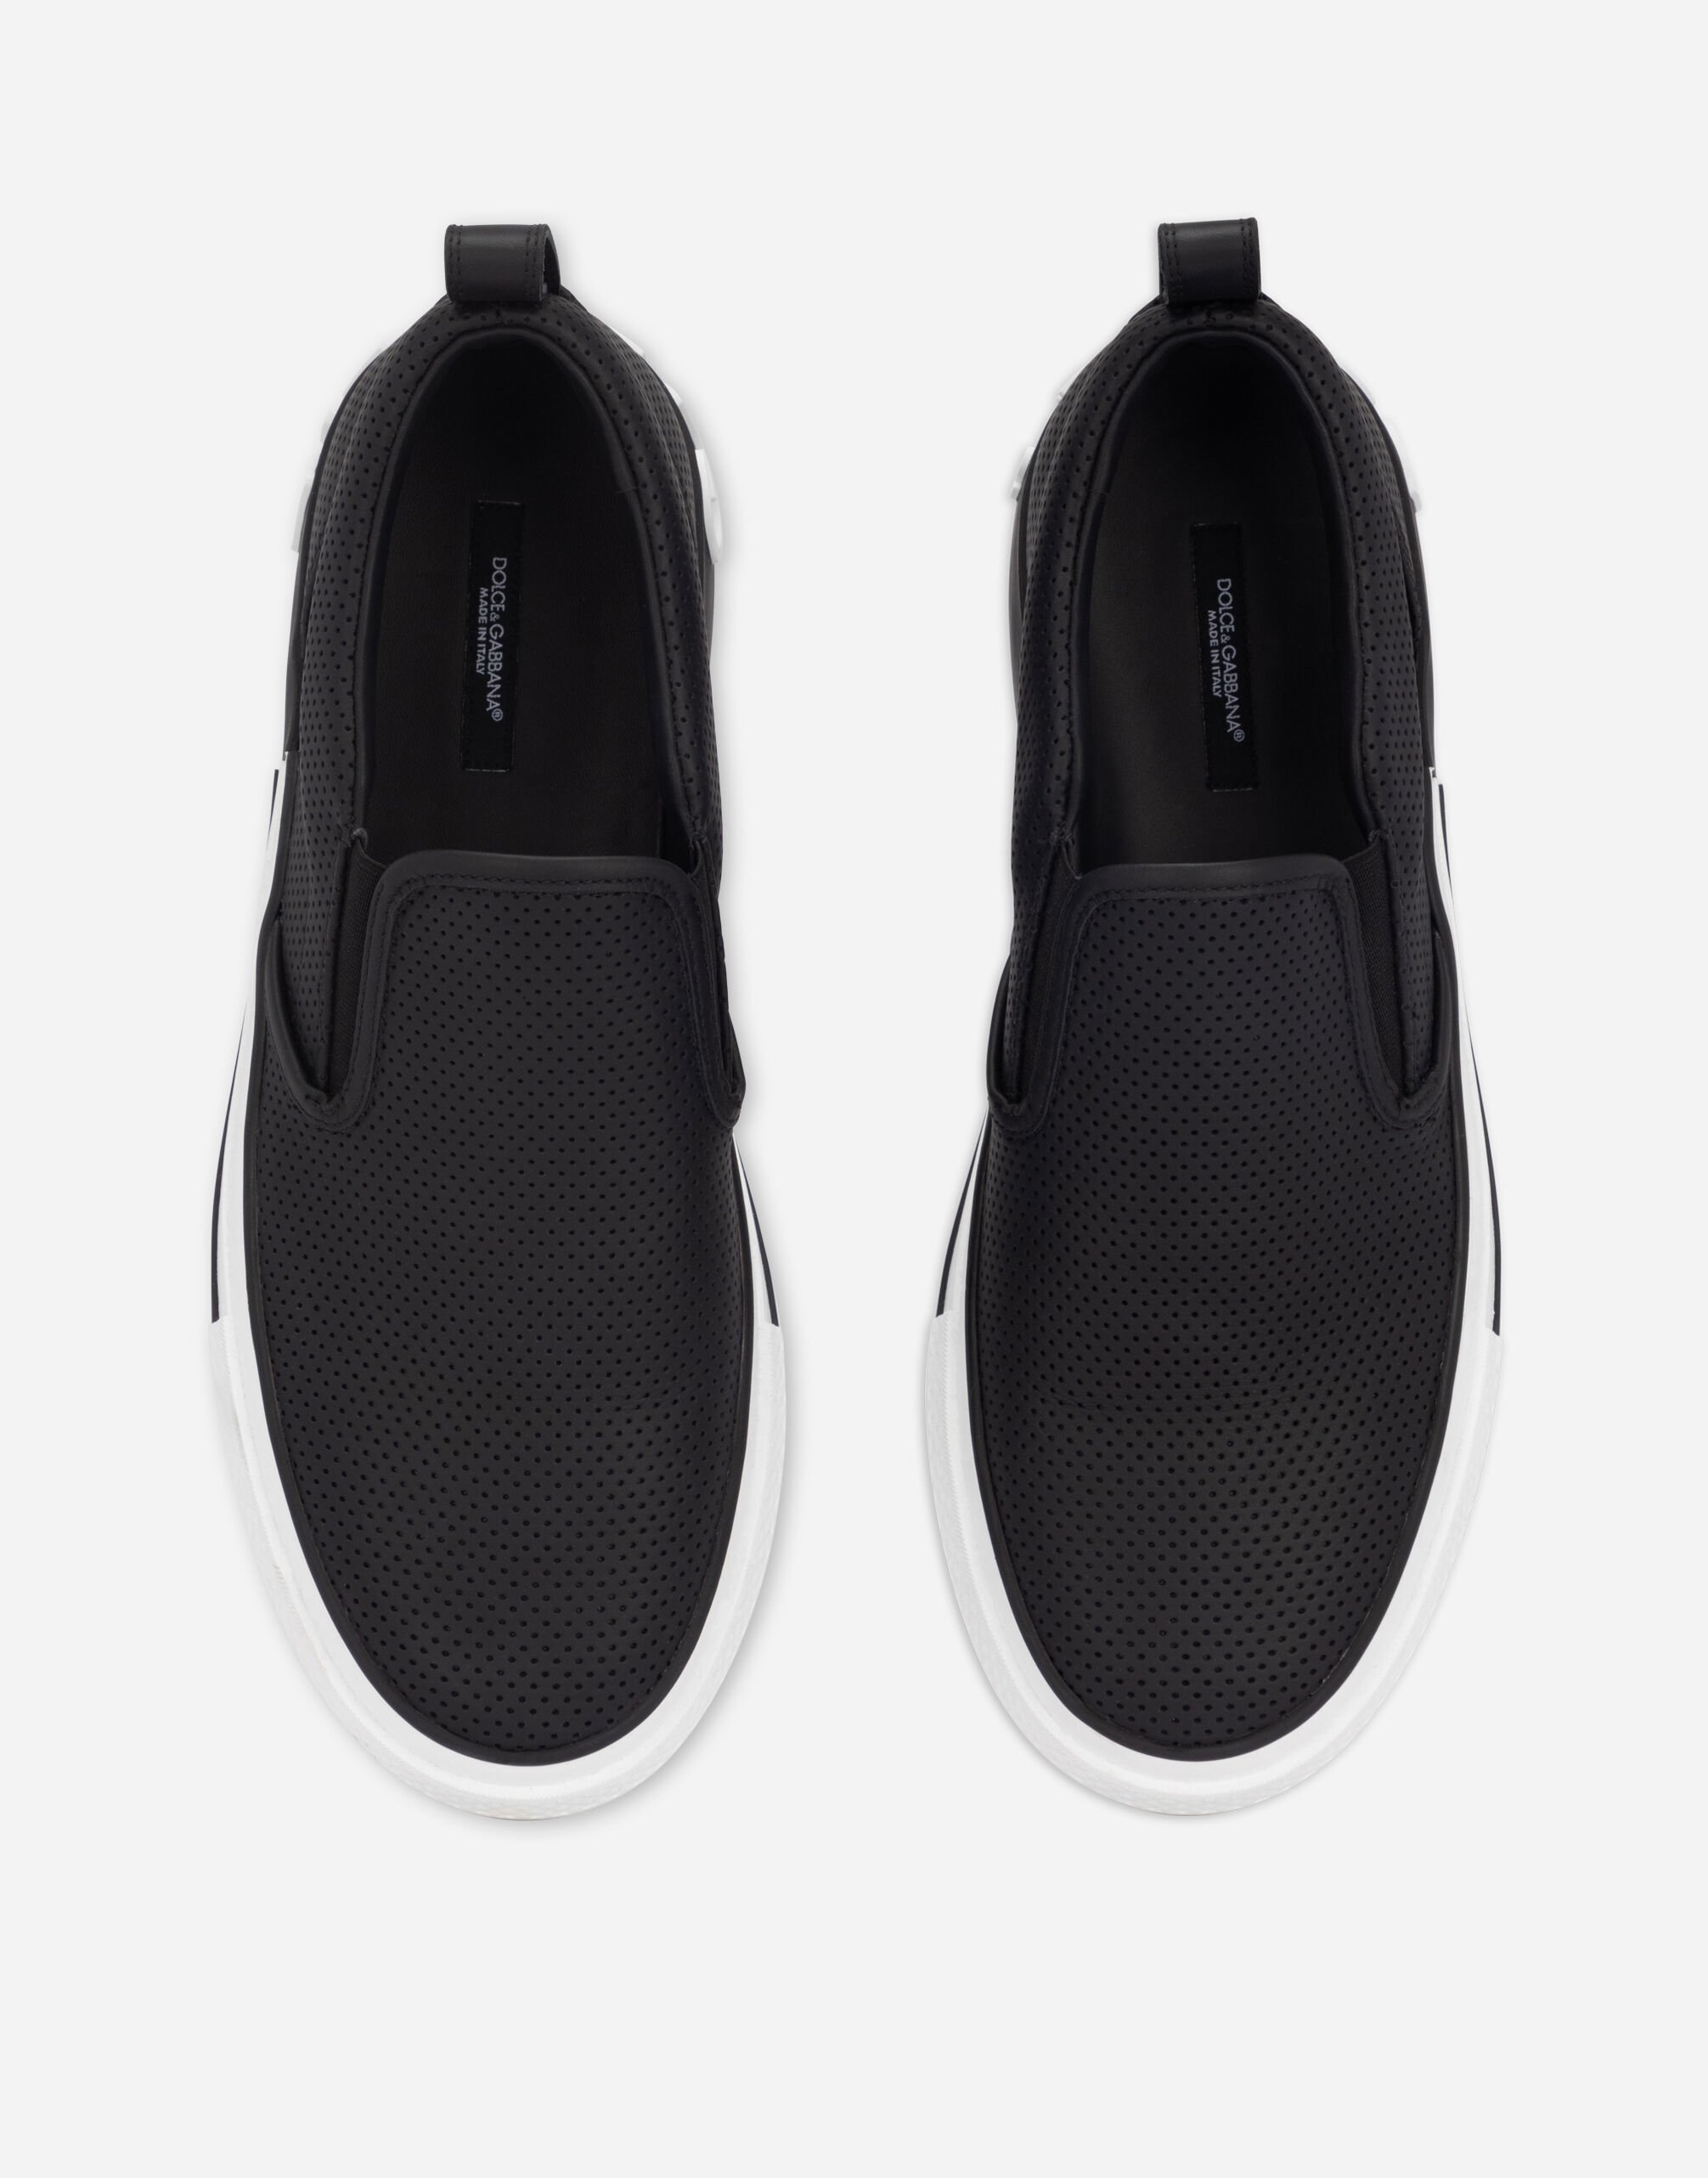 Perforated calfskin Custom 2.Zero slip-on sneakers in Black for 